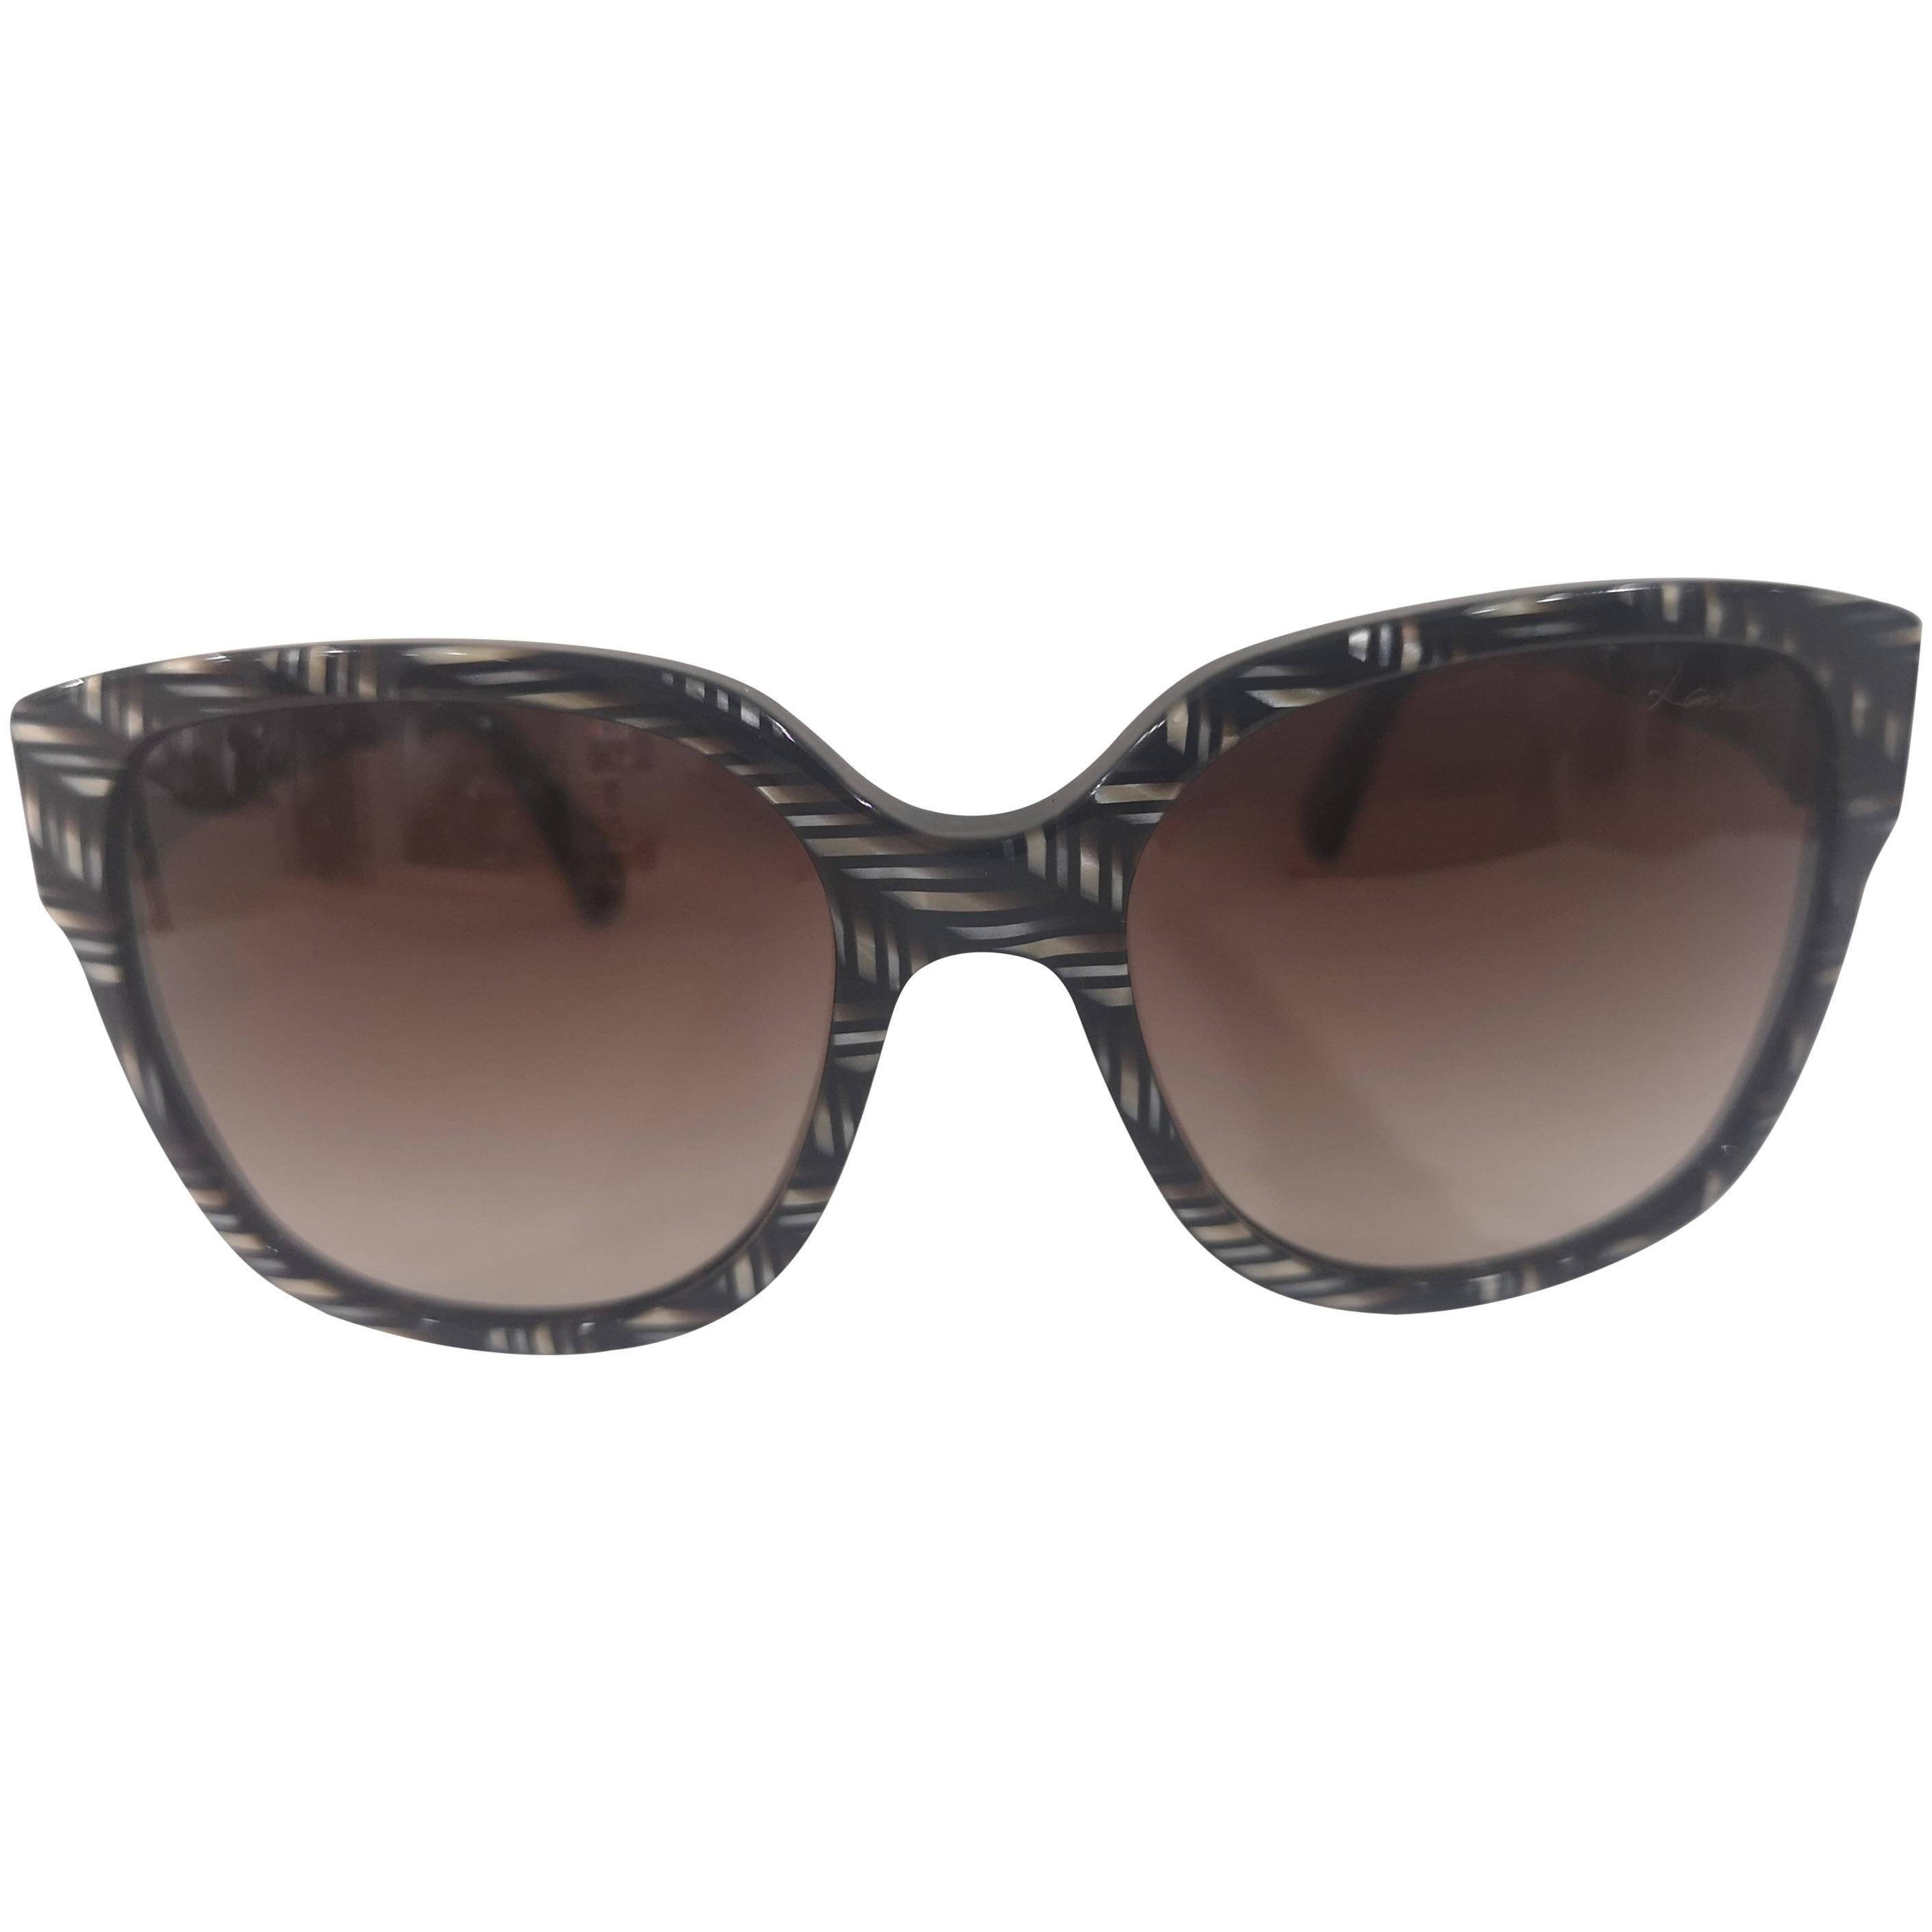 Lanvin Black white sunglasses NWOT For Sale